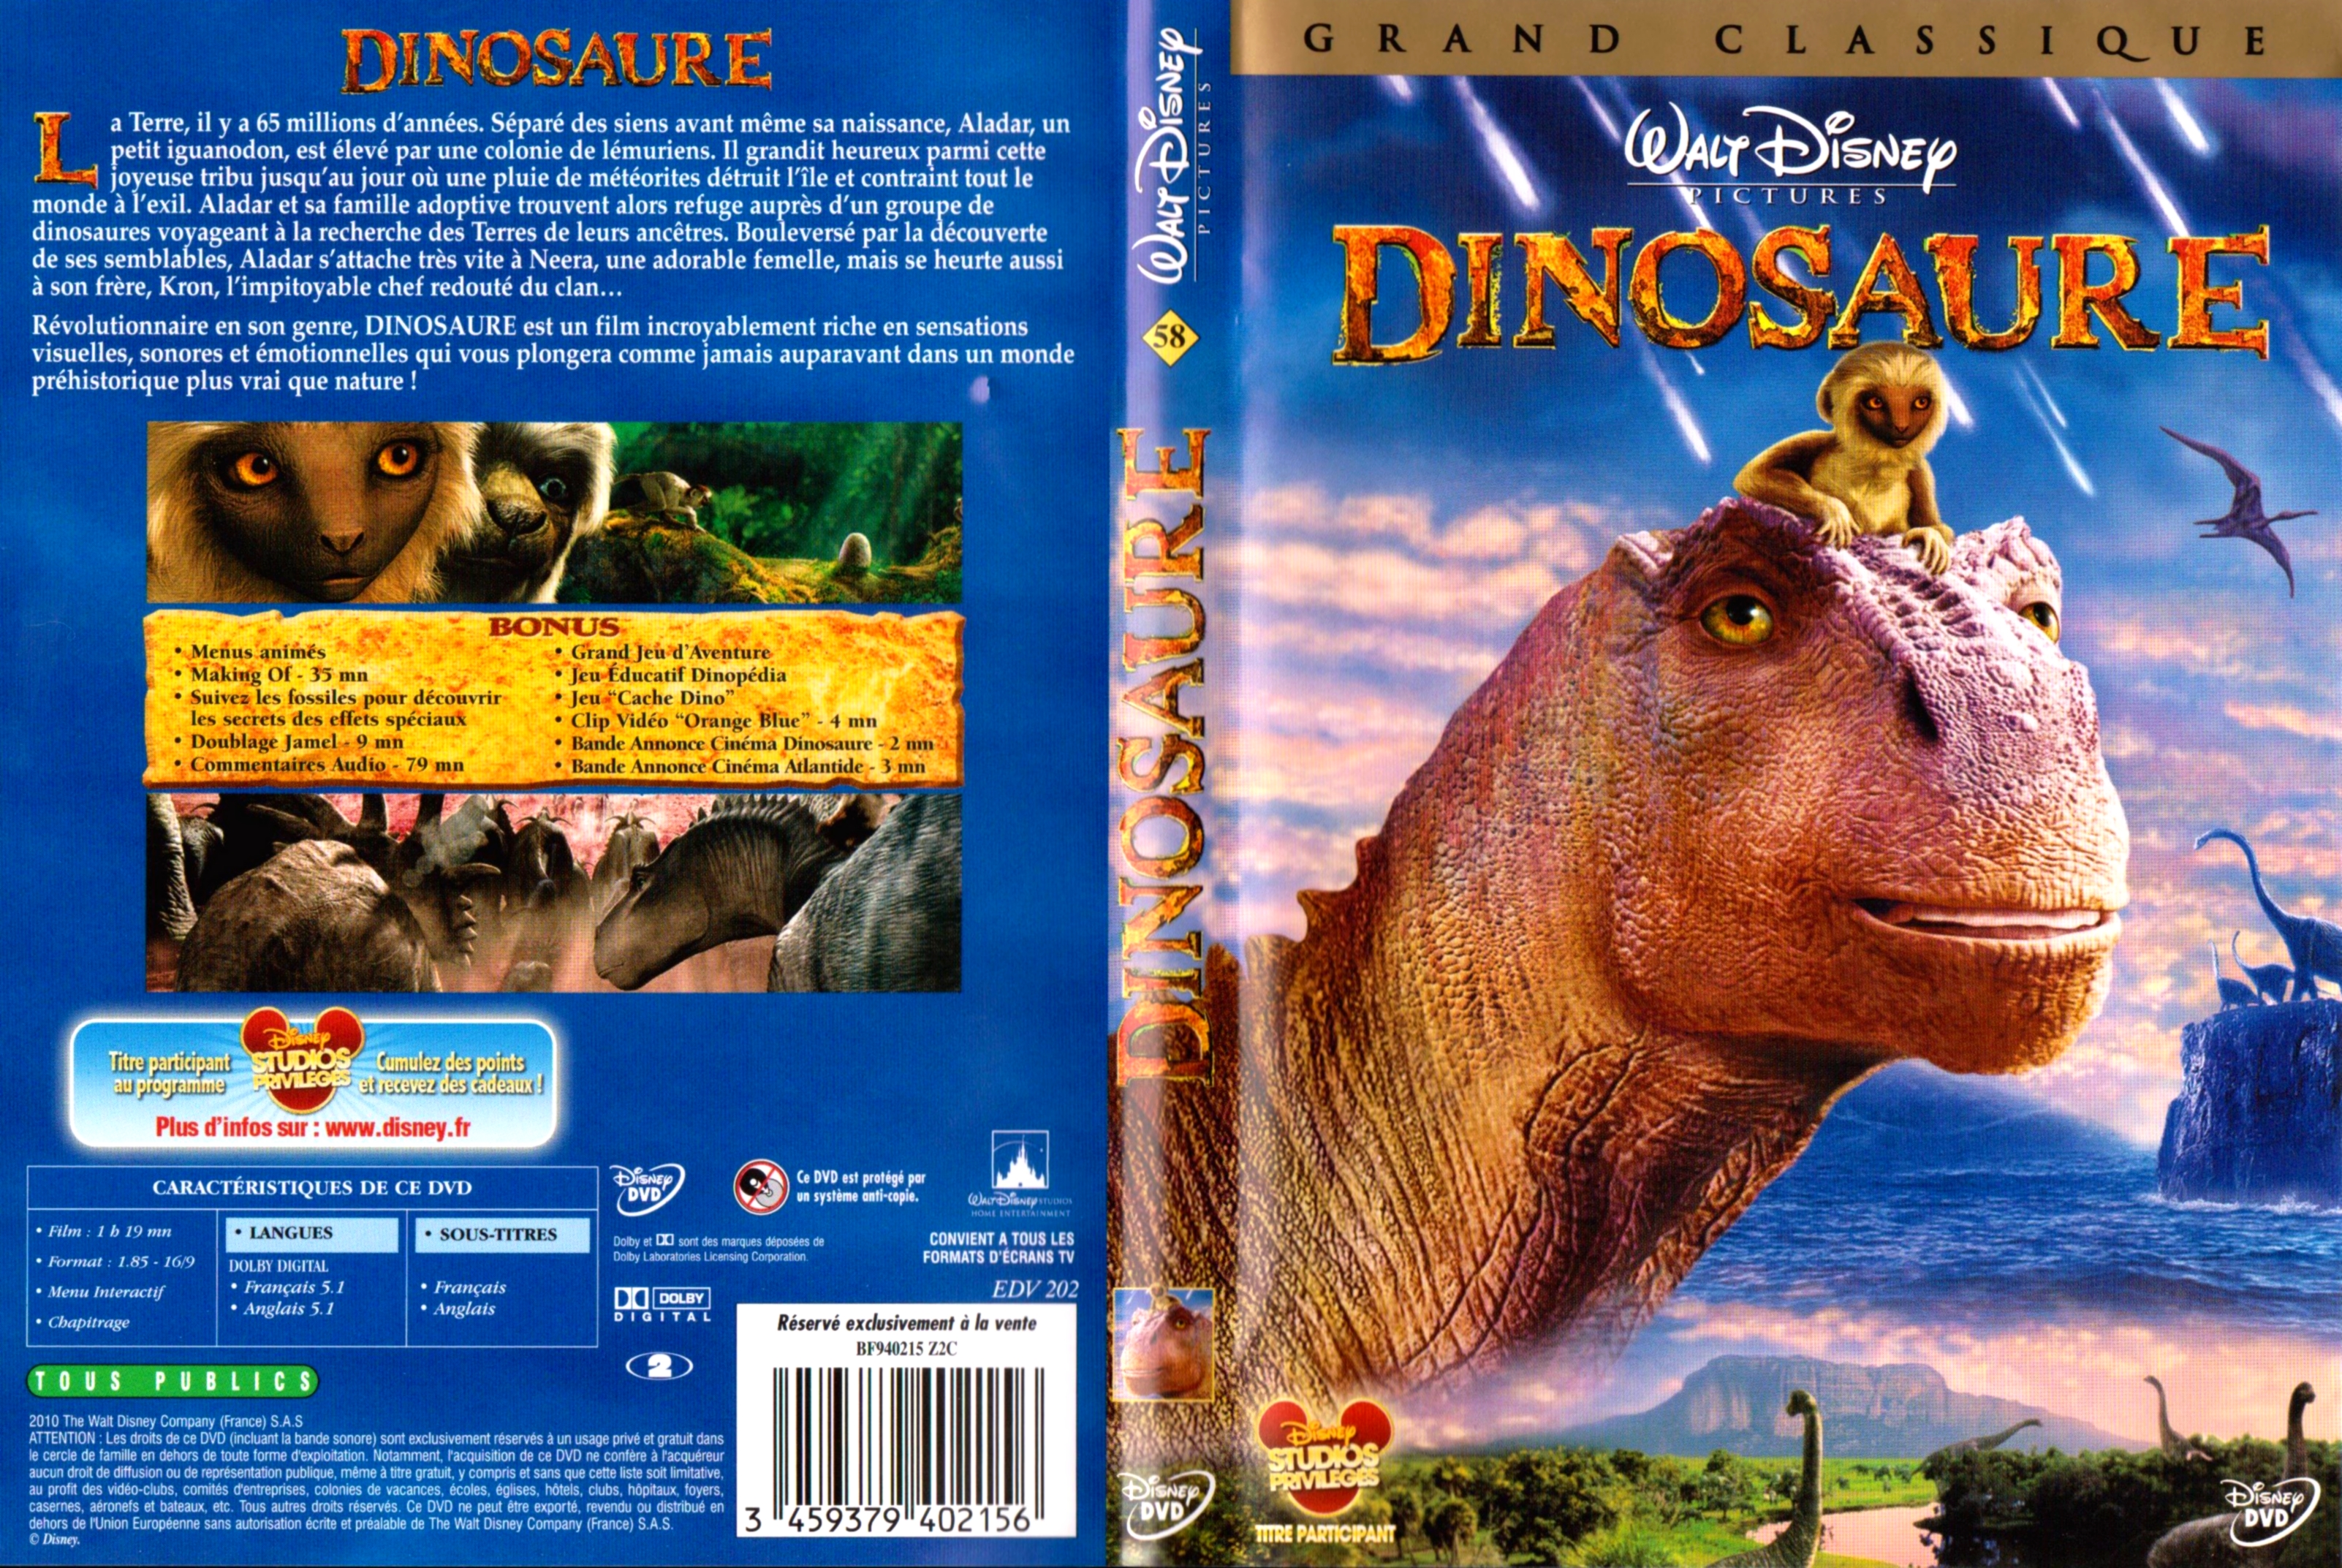 Jaquette DVD Dinosaure v4